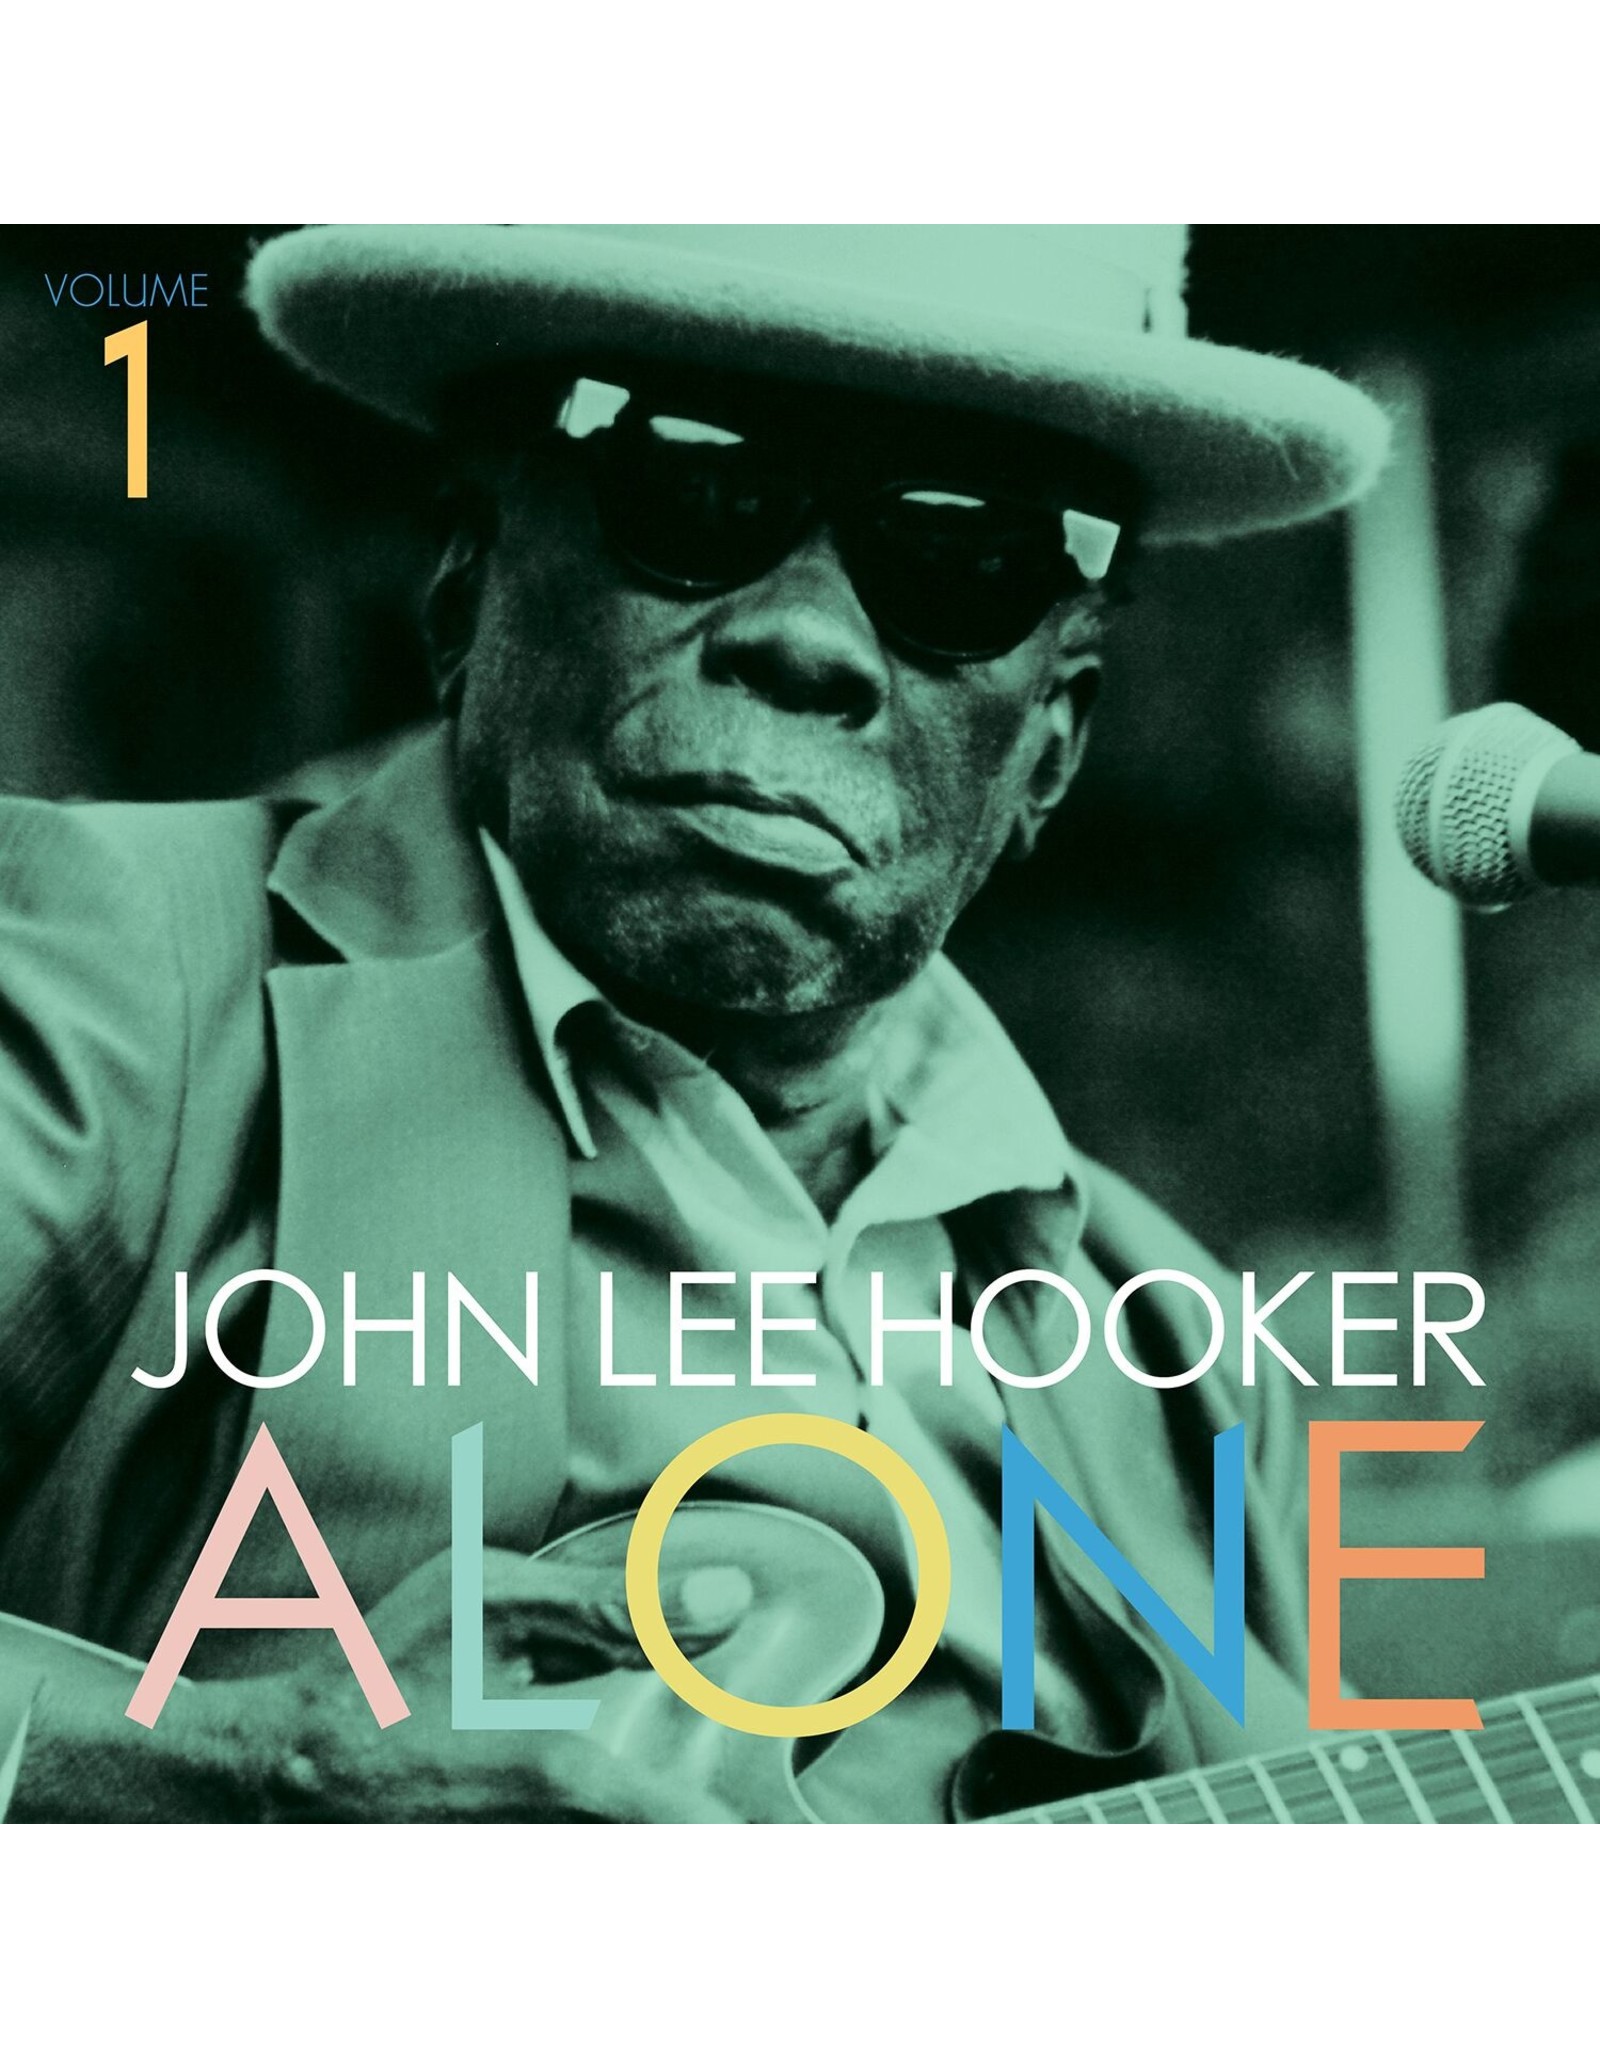 New Vinyl John Lee Hooker - Alone Vol. 1 LP